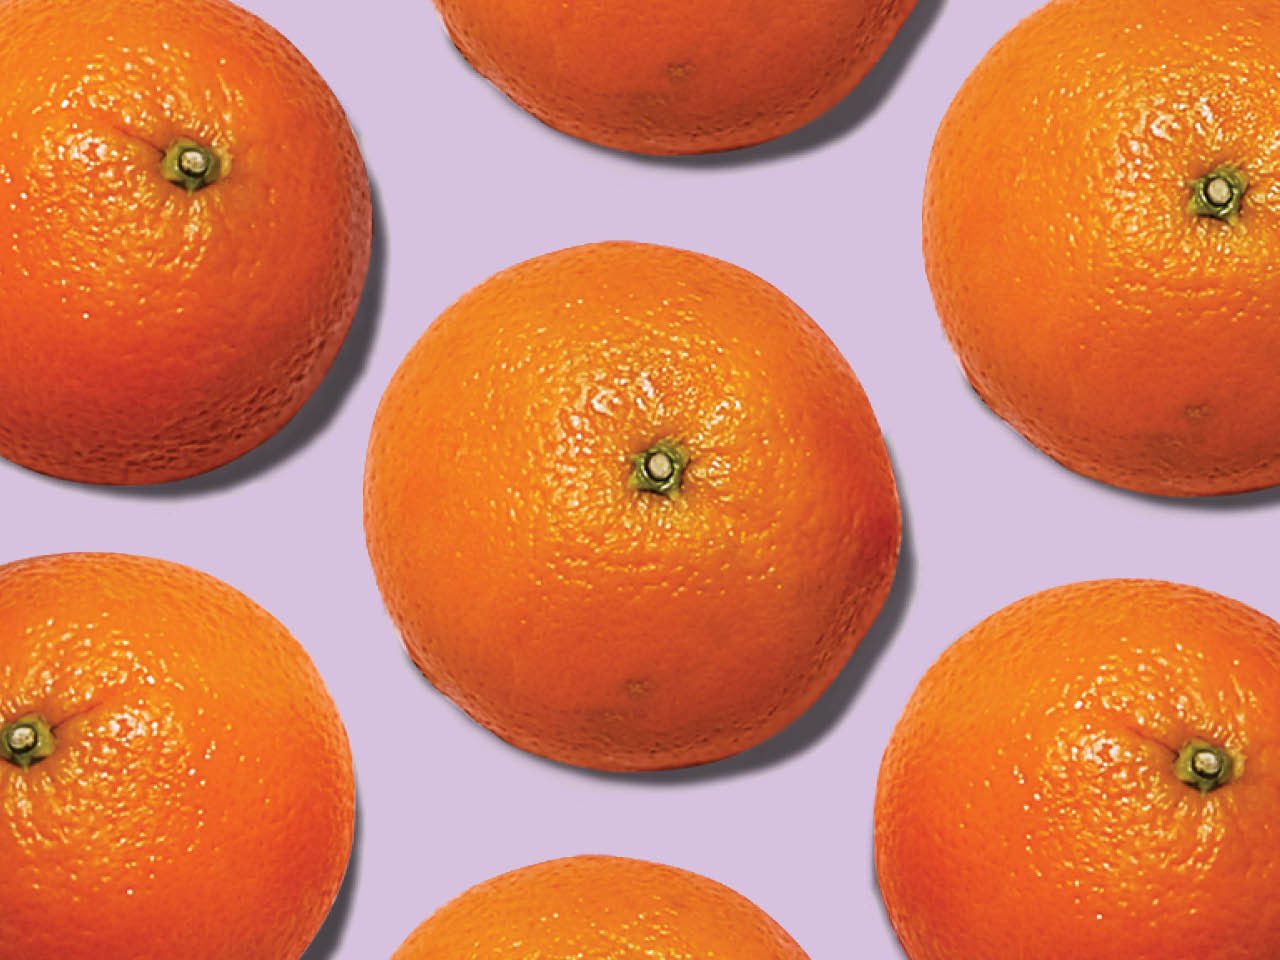 Oranges cut in half sit on a purple background - can oranges reduce dementia?